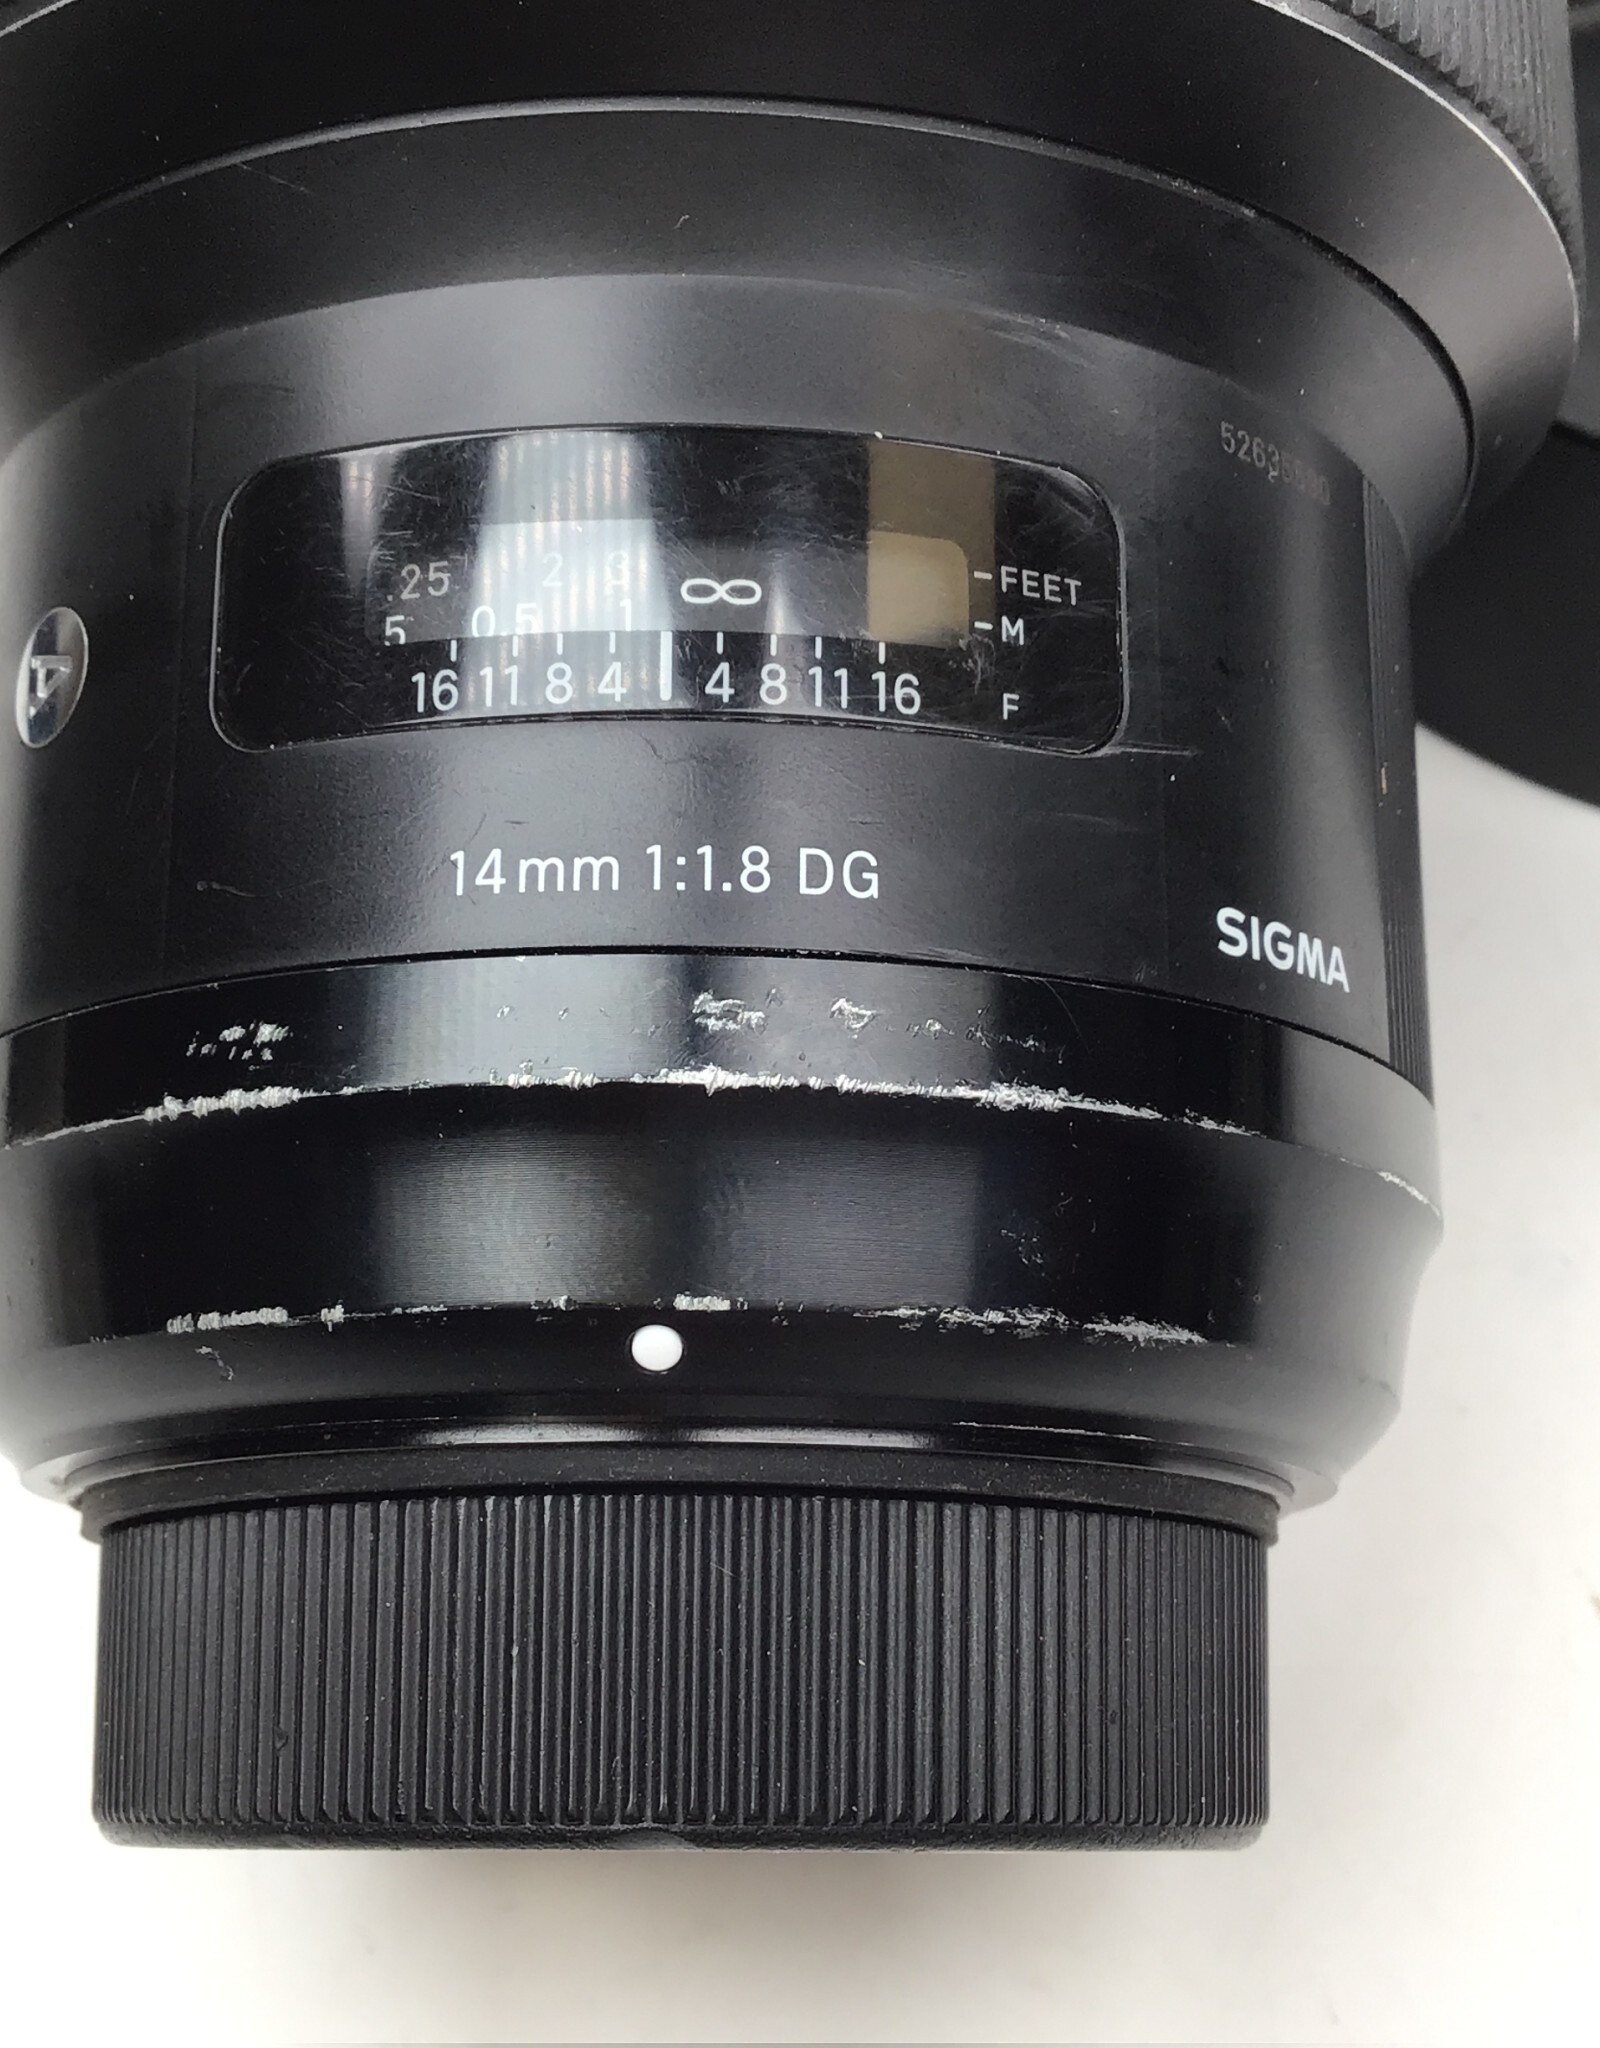 SIGMA Sigma Art 14mm f1.8 DG Lens for Nikon Used Fair